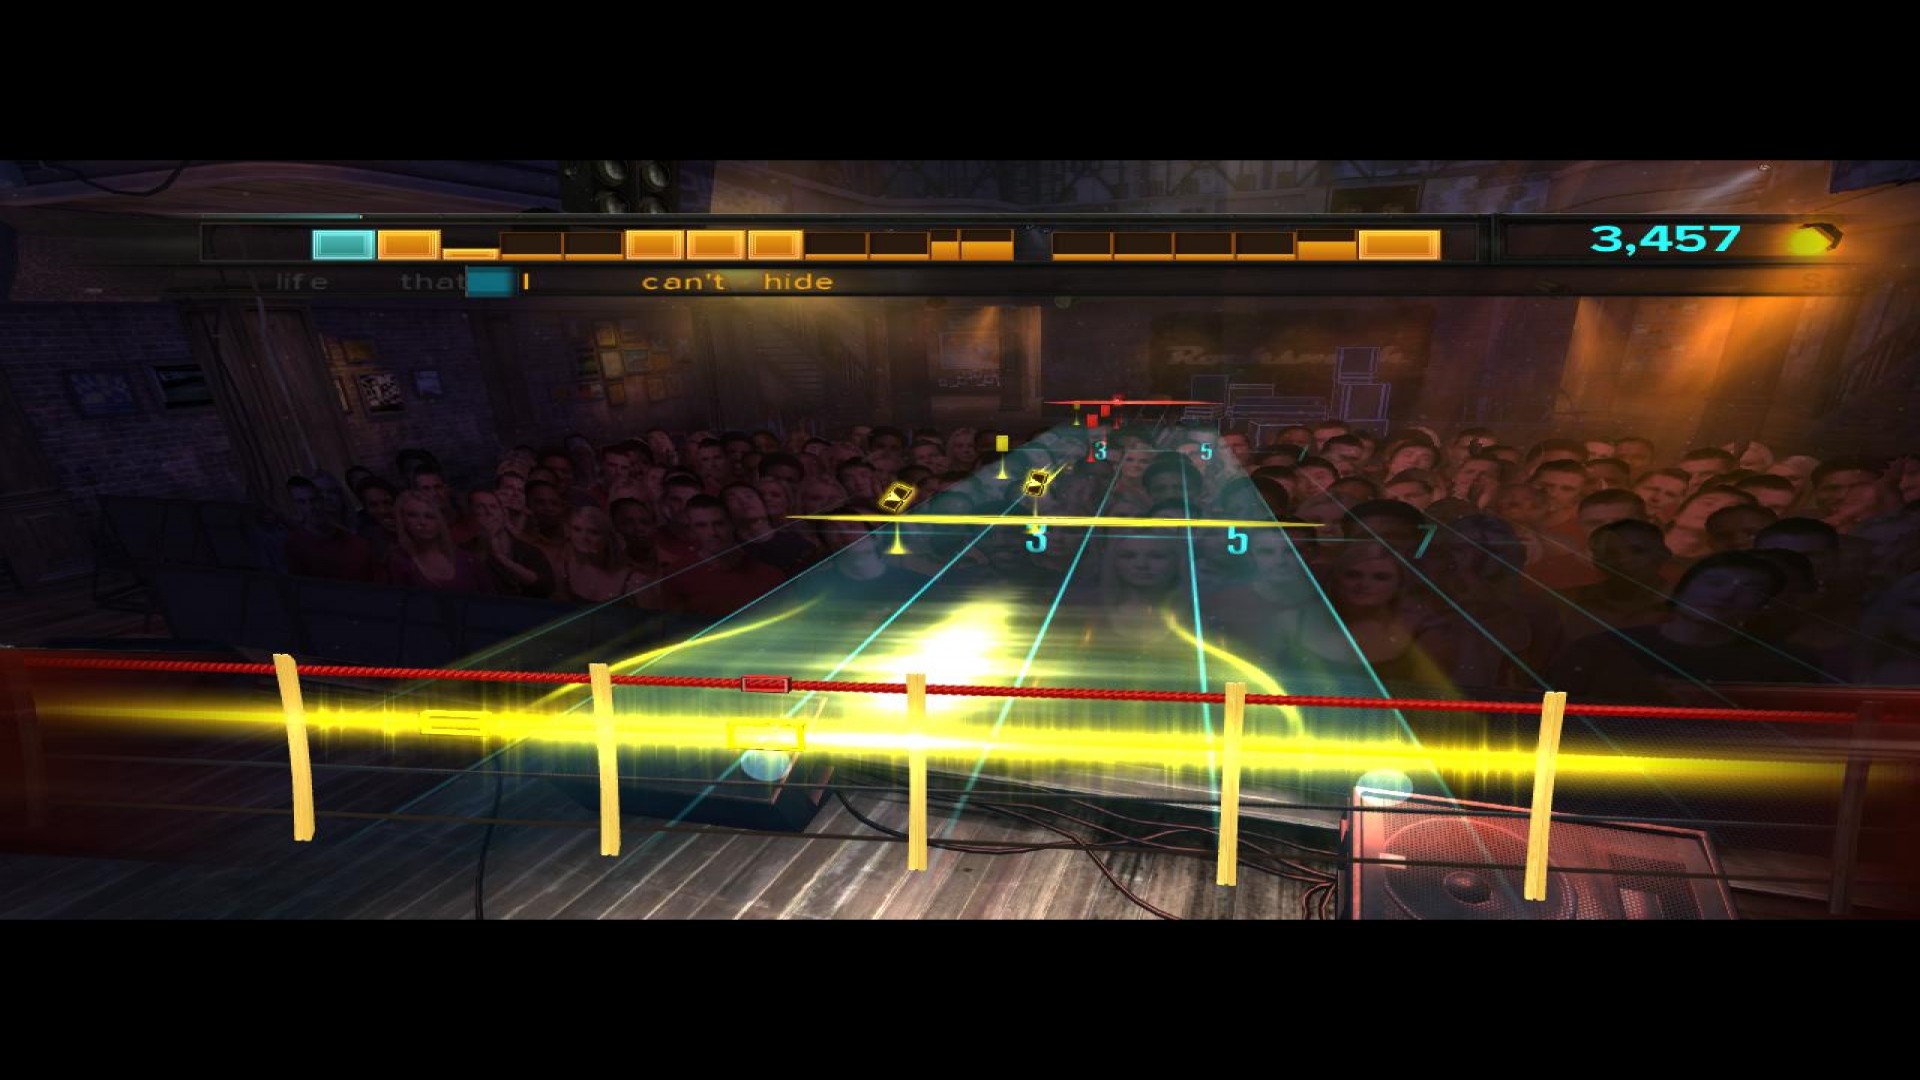 Rocksmith - 3 Doors Down - 3-Song Pack screenshot